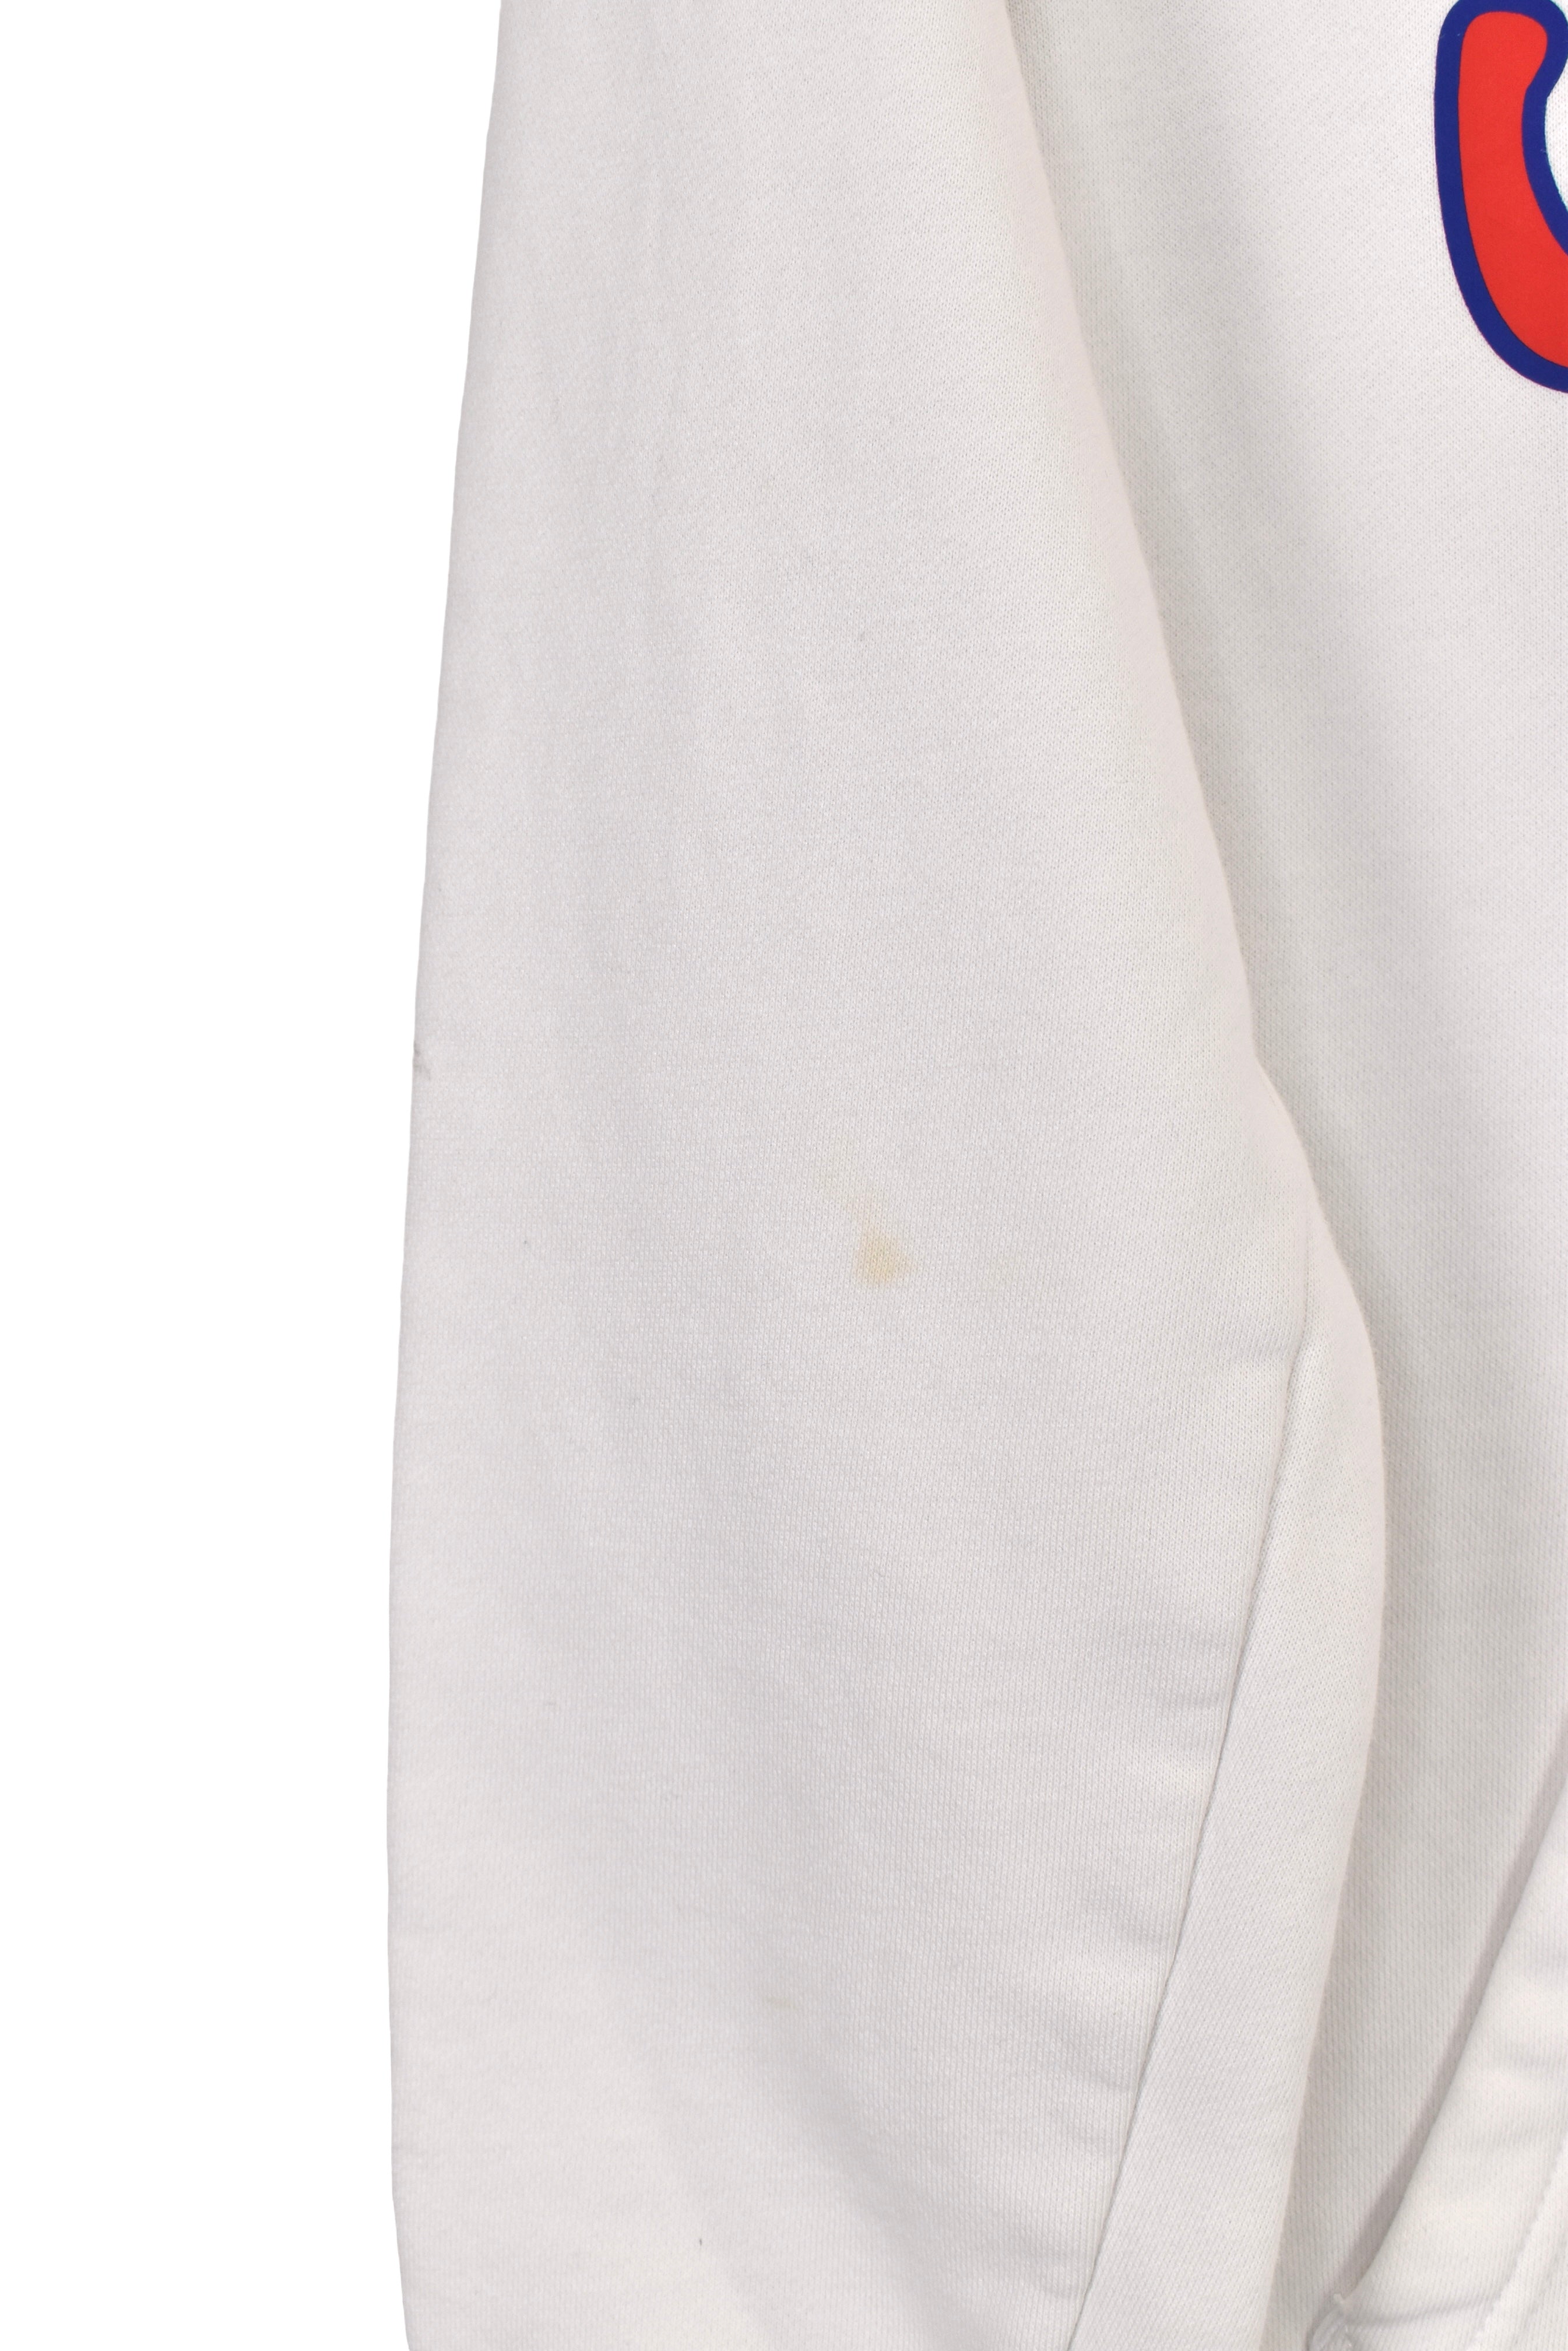 Modern Philadelphia 76ers hoodie (S), NBA NIke graphic white sweatshirt